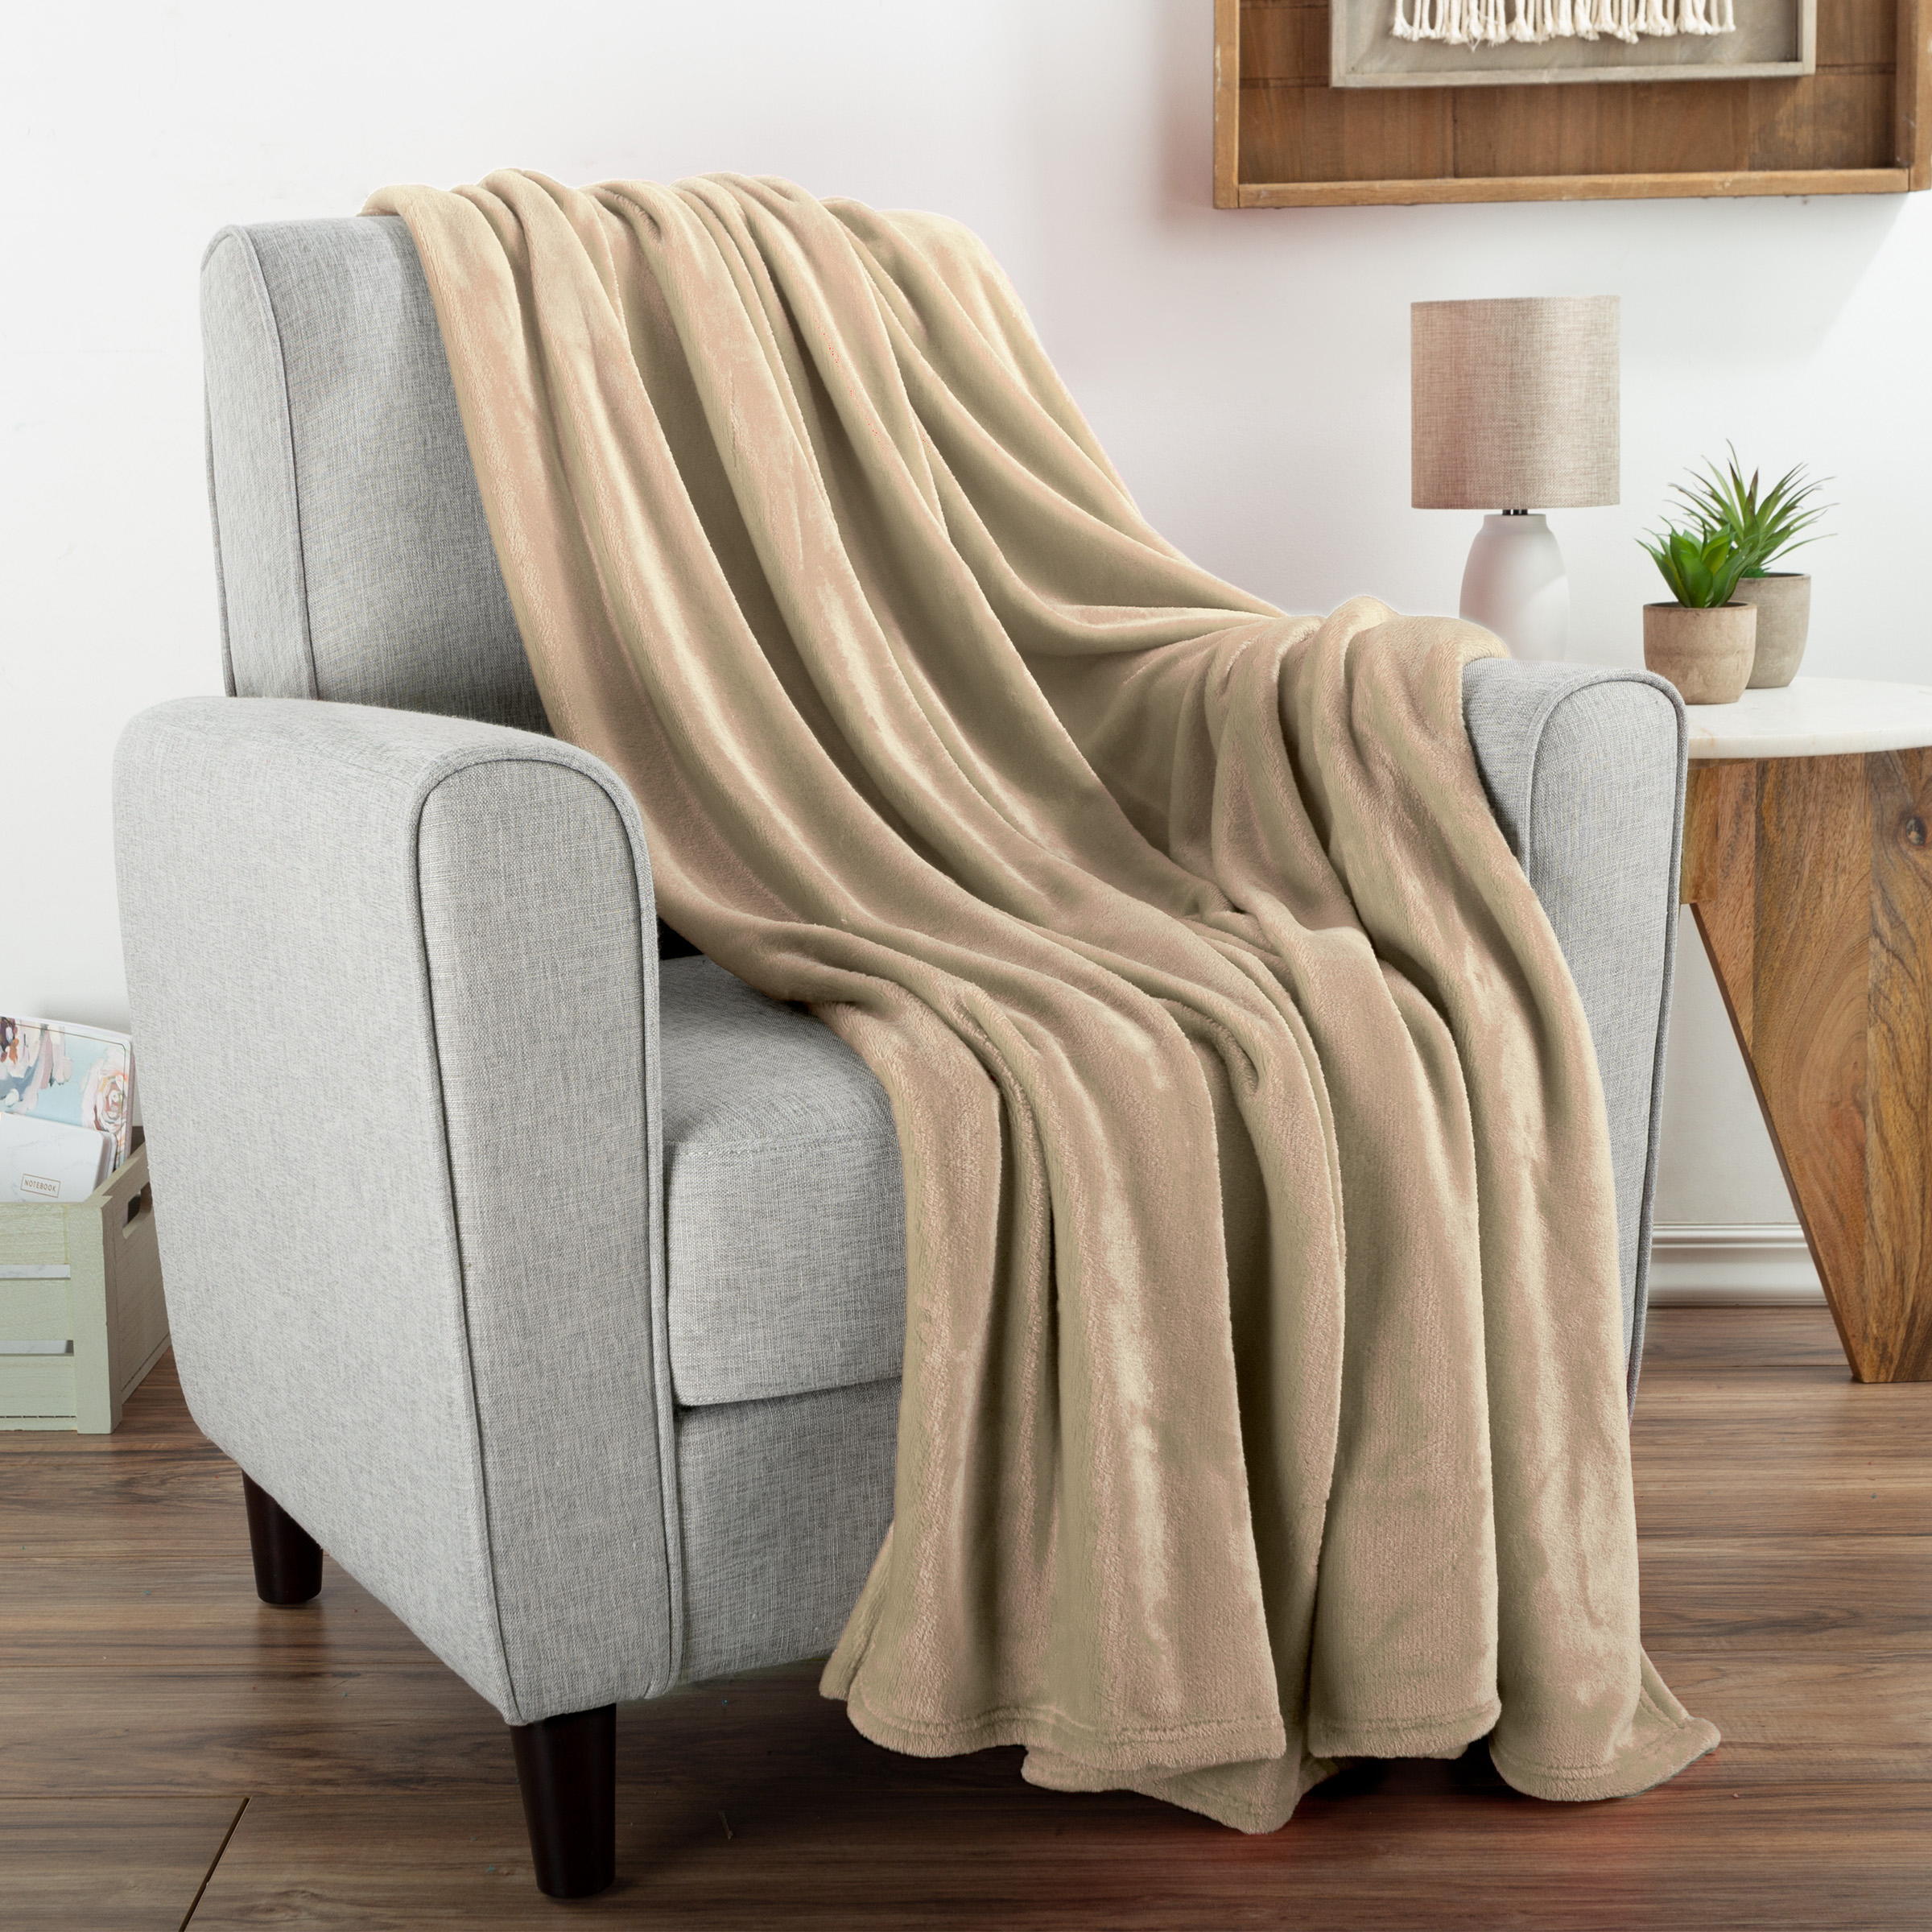 Fleece Throw Blanket- For Couch, Home Décor, Sofa & Chair- Oversized 60” X 70”- Lightweight, Soft & Plush Microfiber - Crimson Red